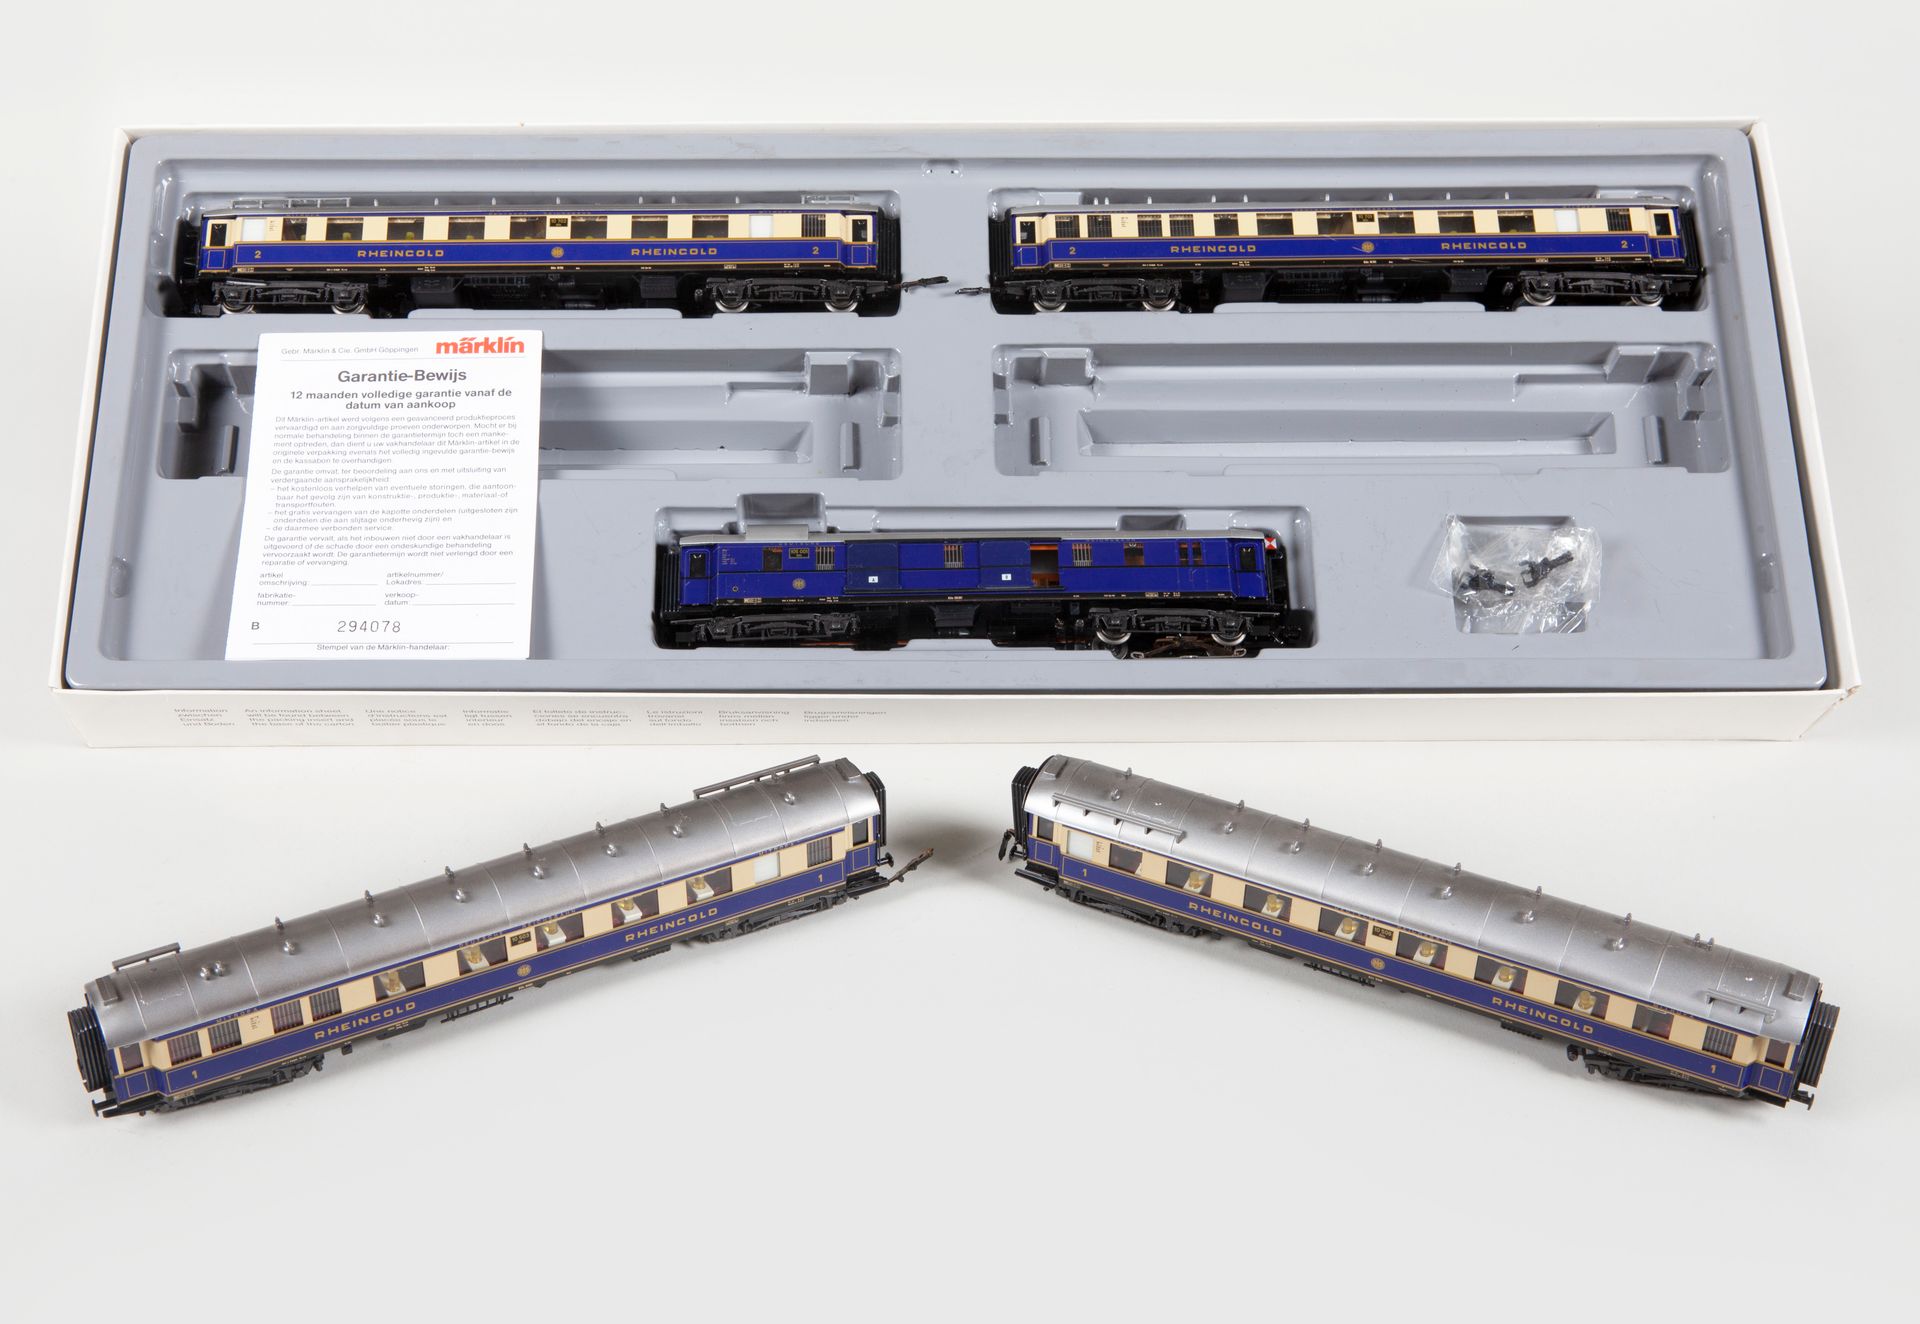 Null MARKLIN_x000D_满载的列车

塑料。_x000D_。

由机车发动机和用于客运的车厢组成。_x000D_。

原装盒和说明书。